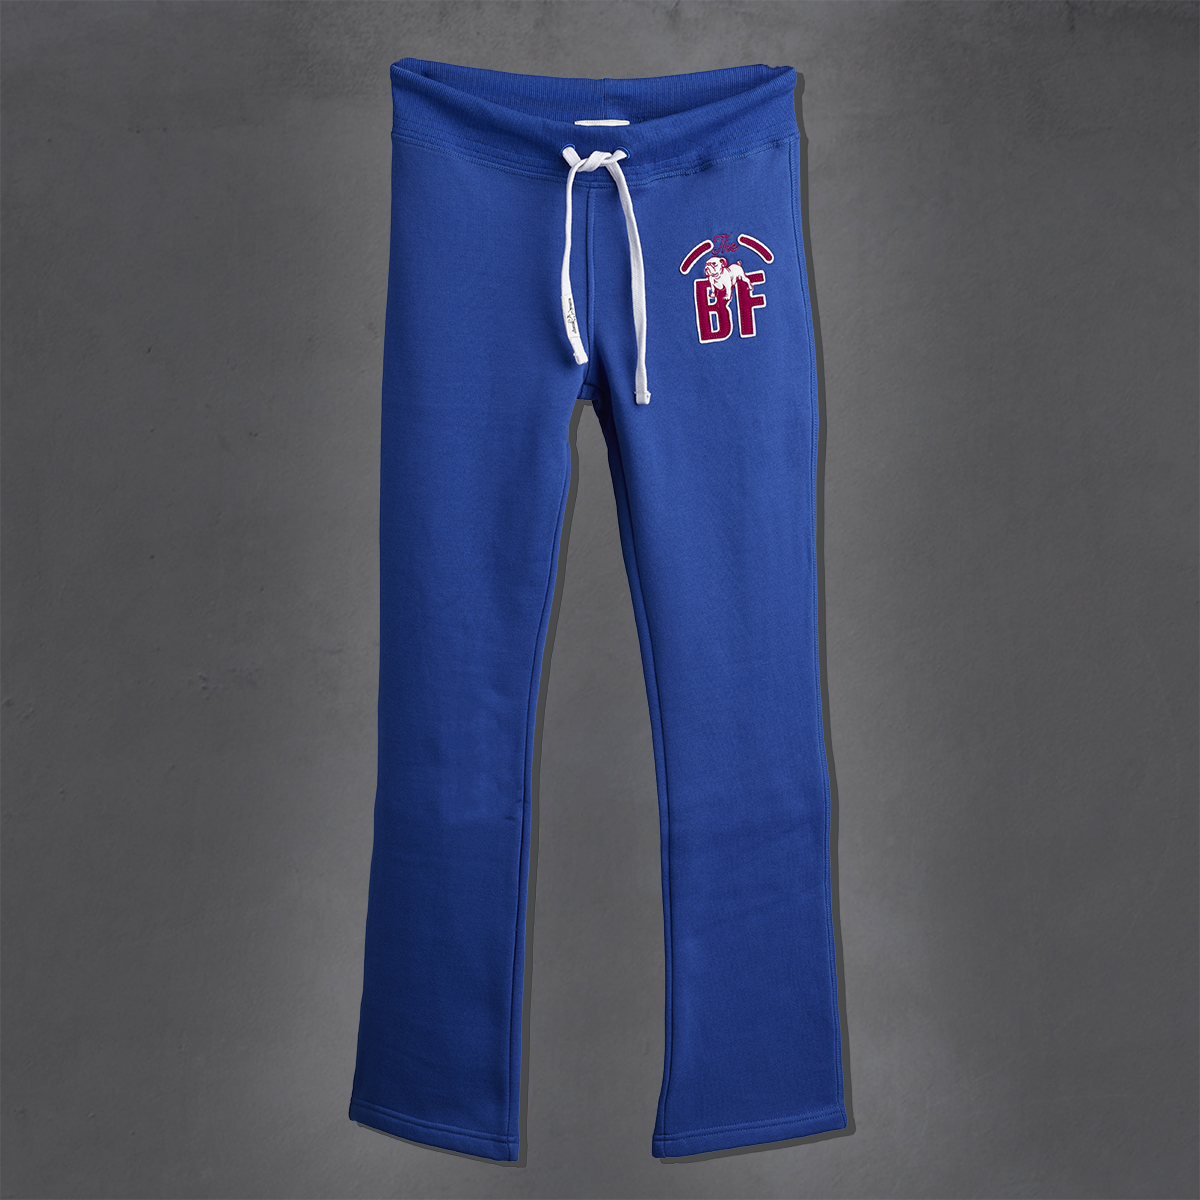 Girls Heritage Sweatpants - Dazzling Blue